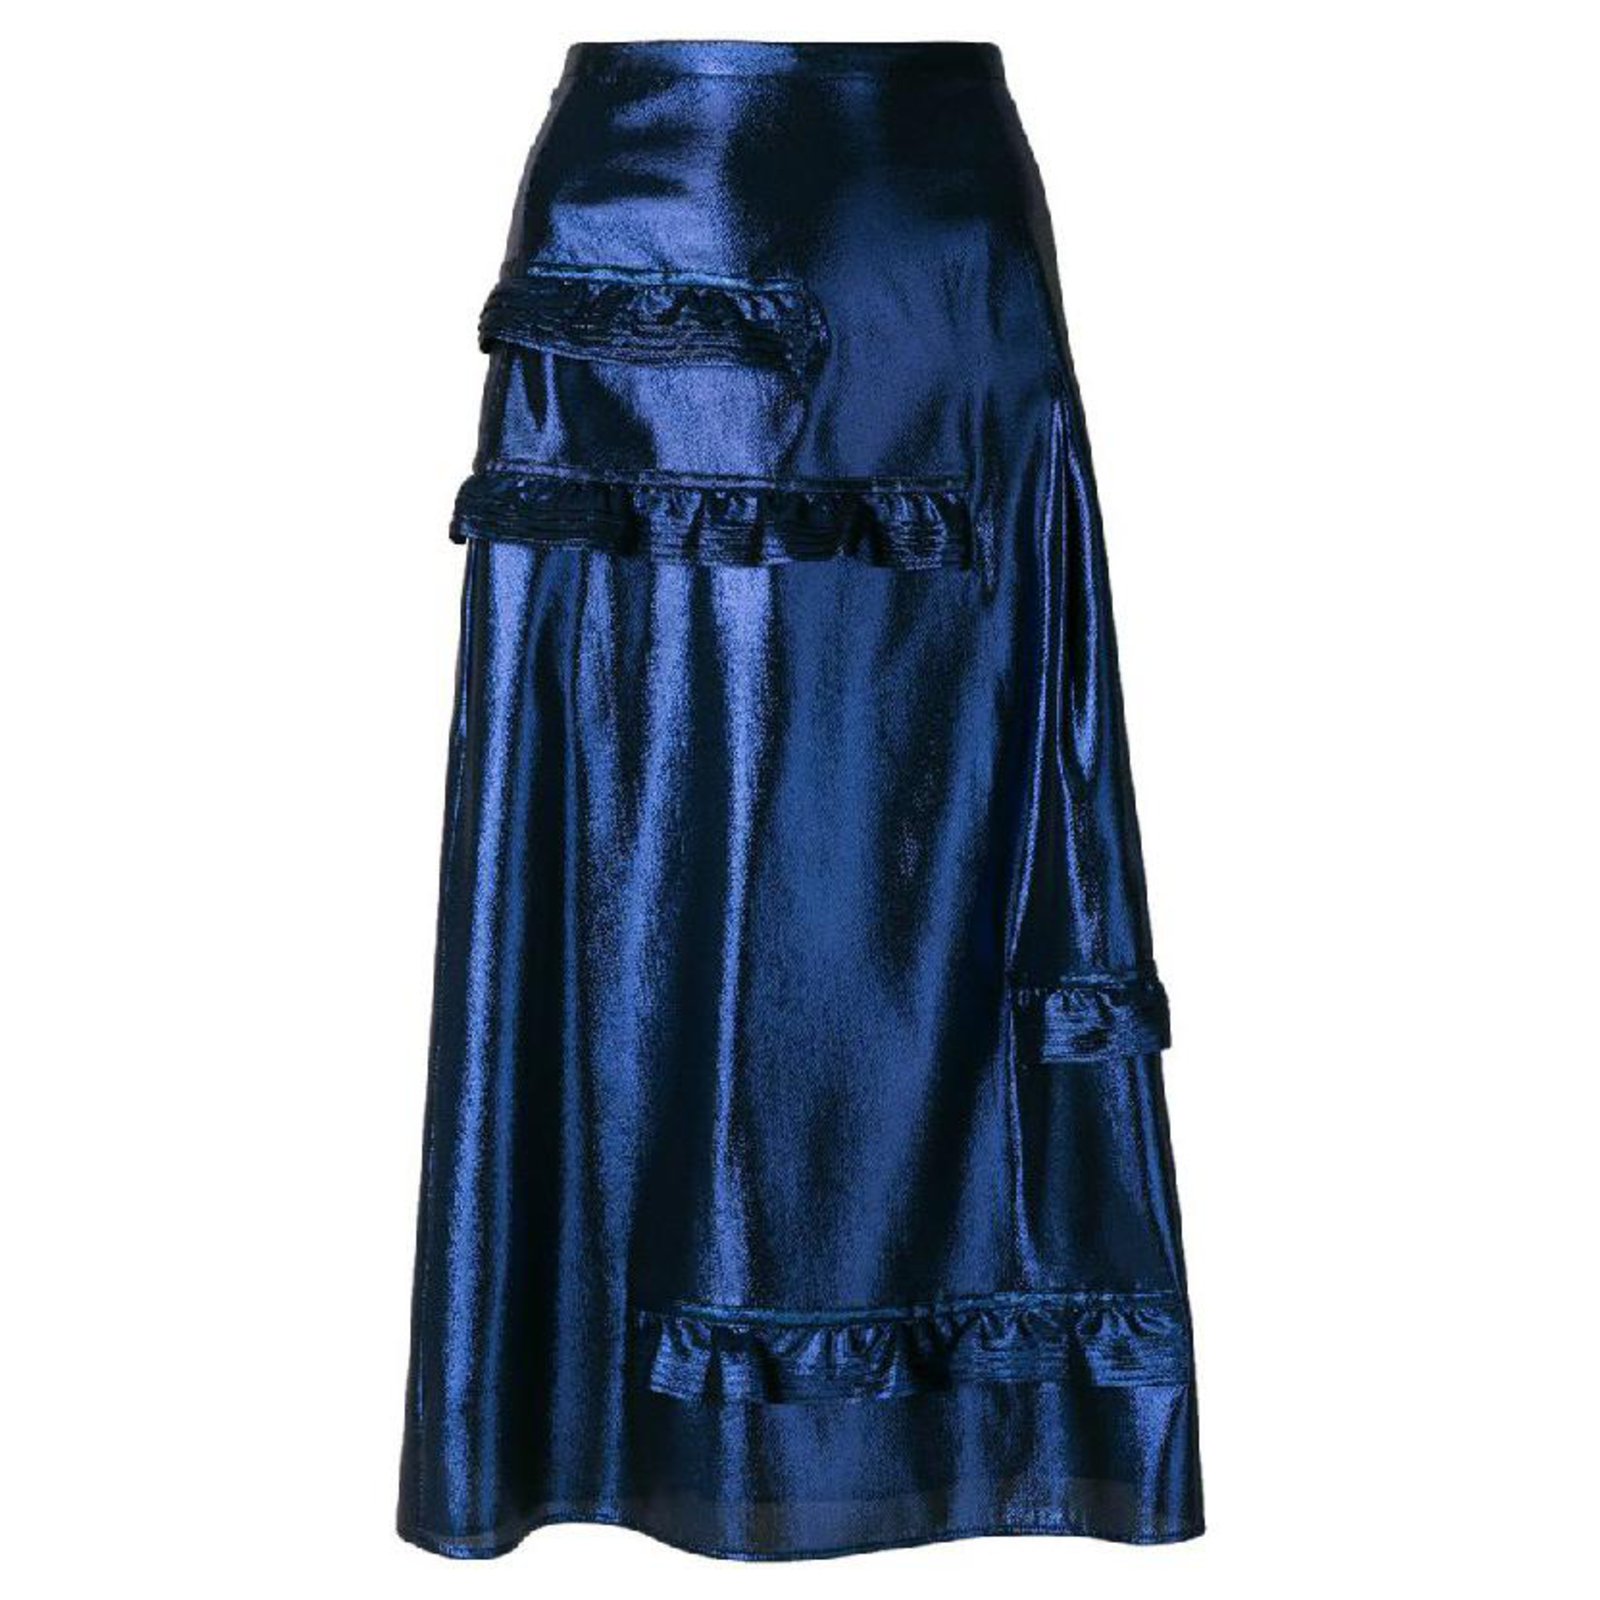 burberry skirt blue